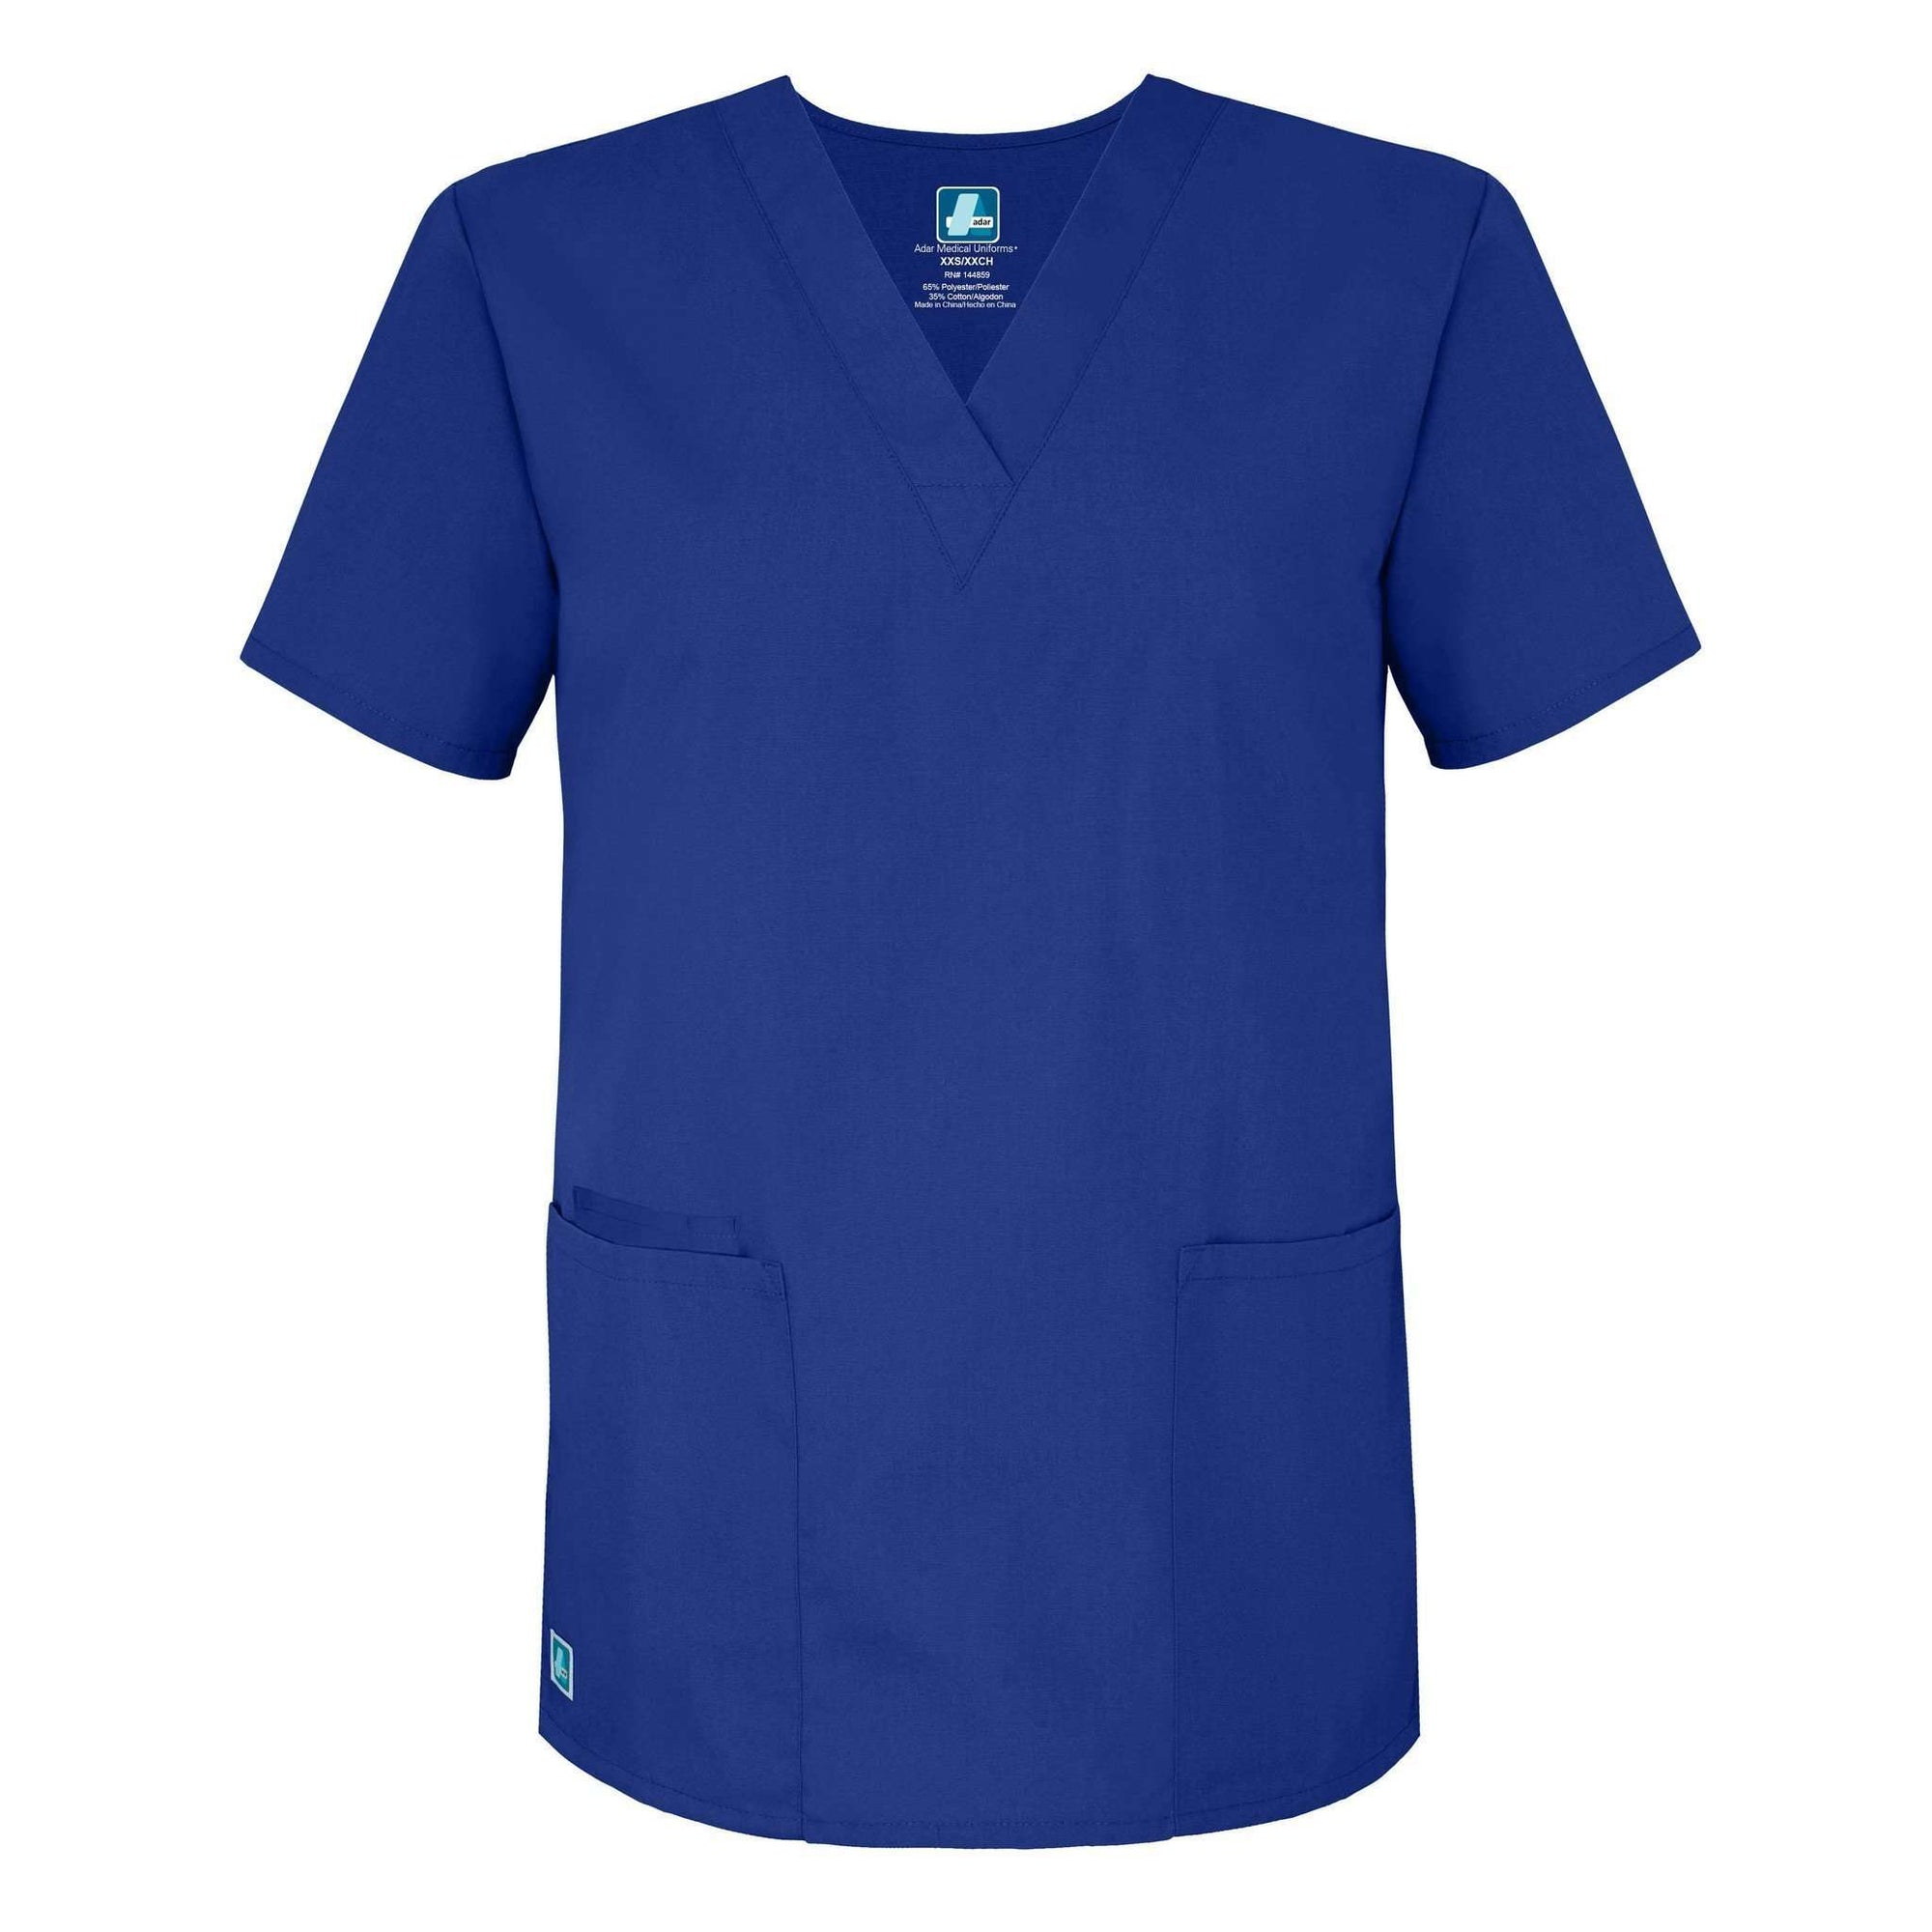  Adar - uniforms Medical Uniform Tops uniforms online Adar Universal Unisex V-Neck 2 Pocket Scrub Top Royal Blue M - SchoolUniforms.com